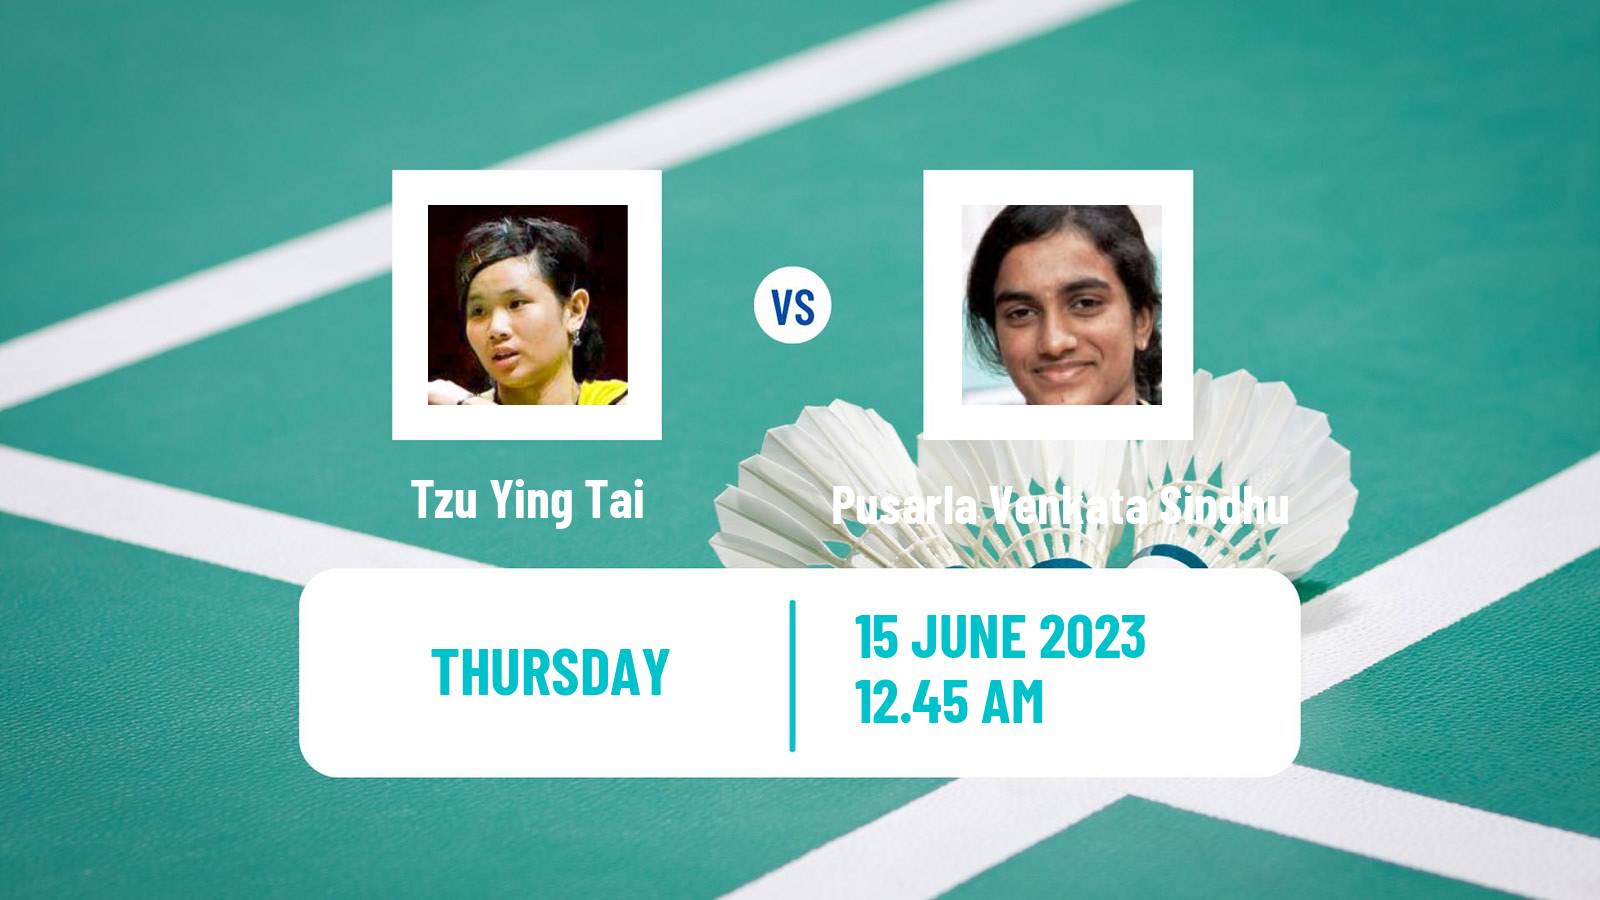 Badminton BWF World Tour Indonesia Open Women Tzu Ying Tai - Pusarla Venkata Sindhu